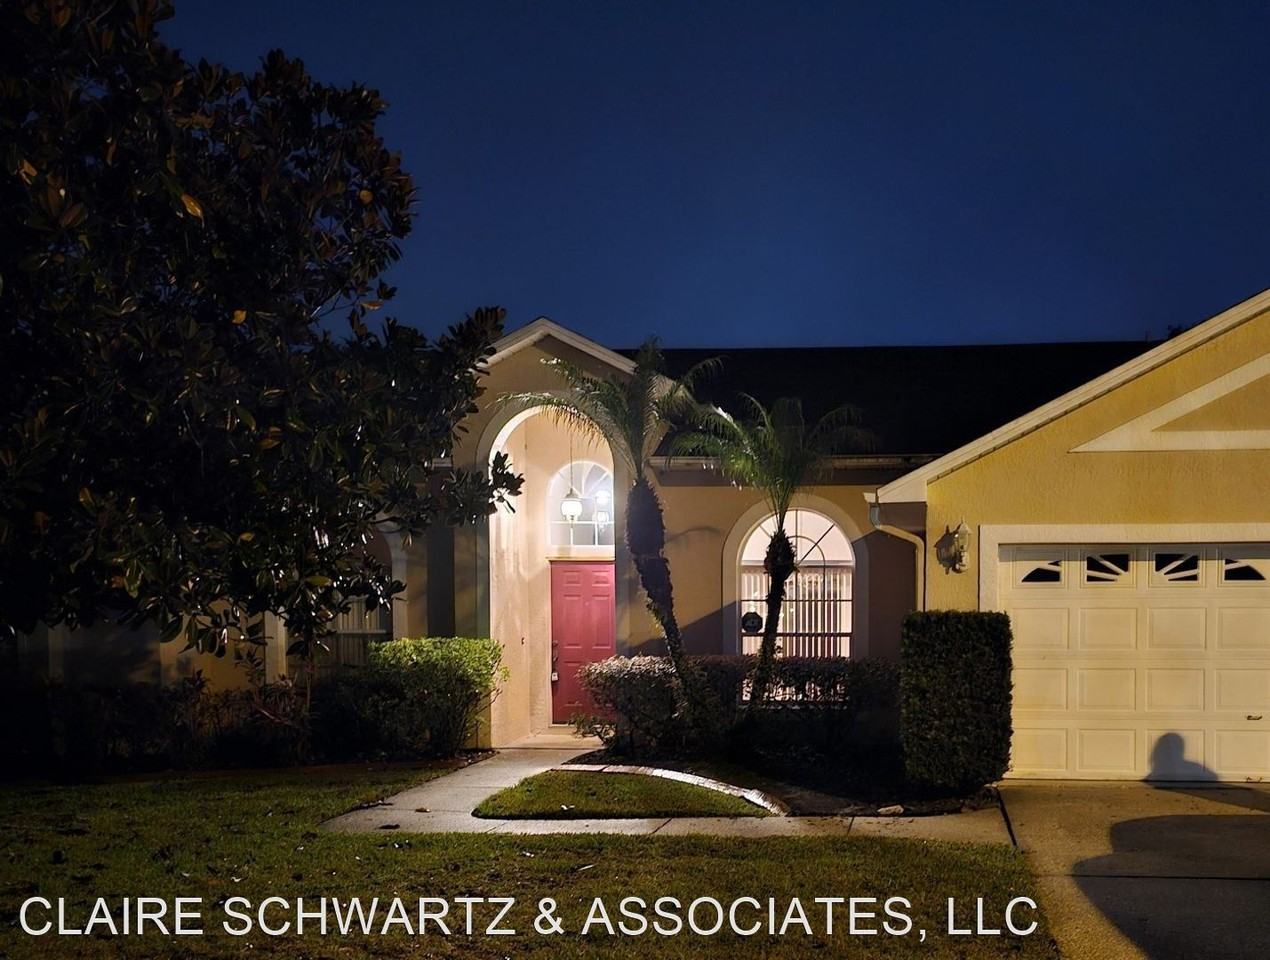 Claire Schwartz & Associates, LLC